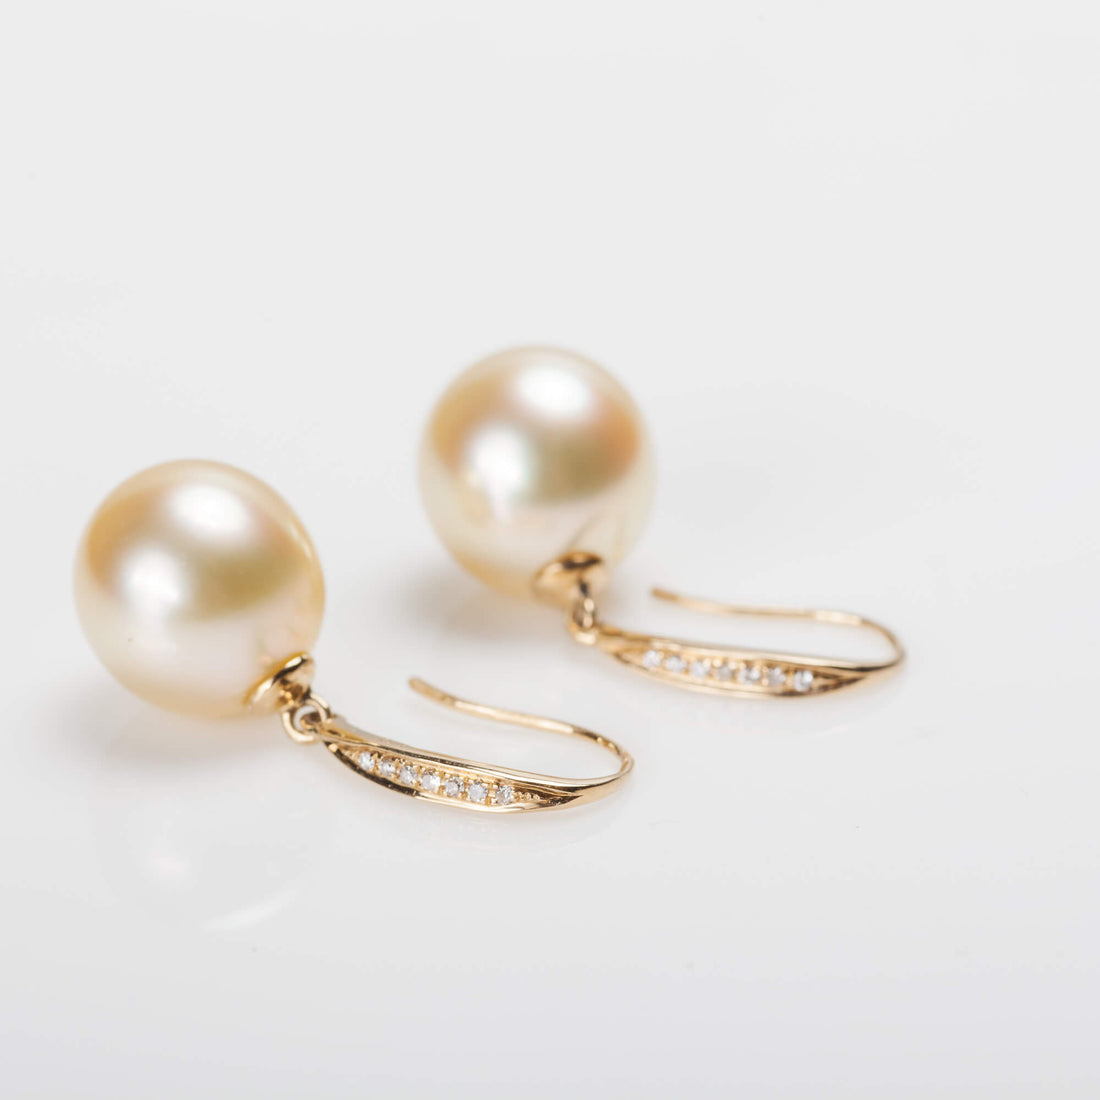 How to waer Pearls Jewellery